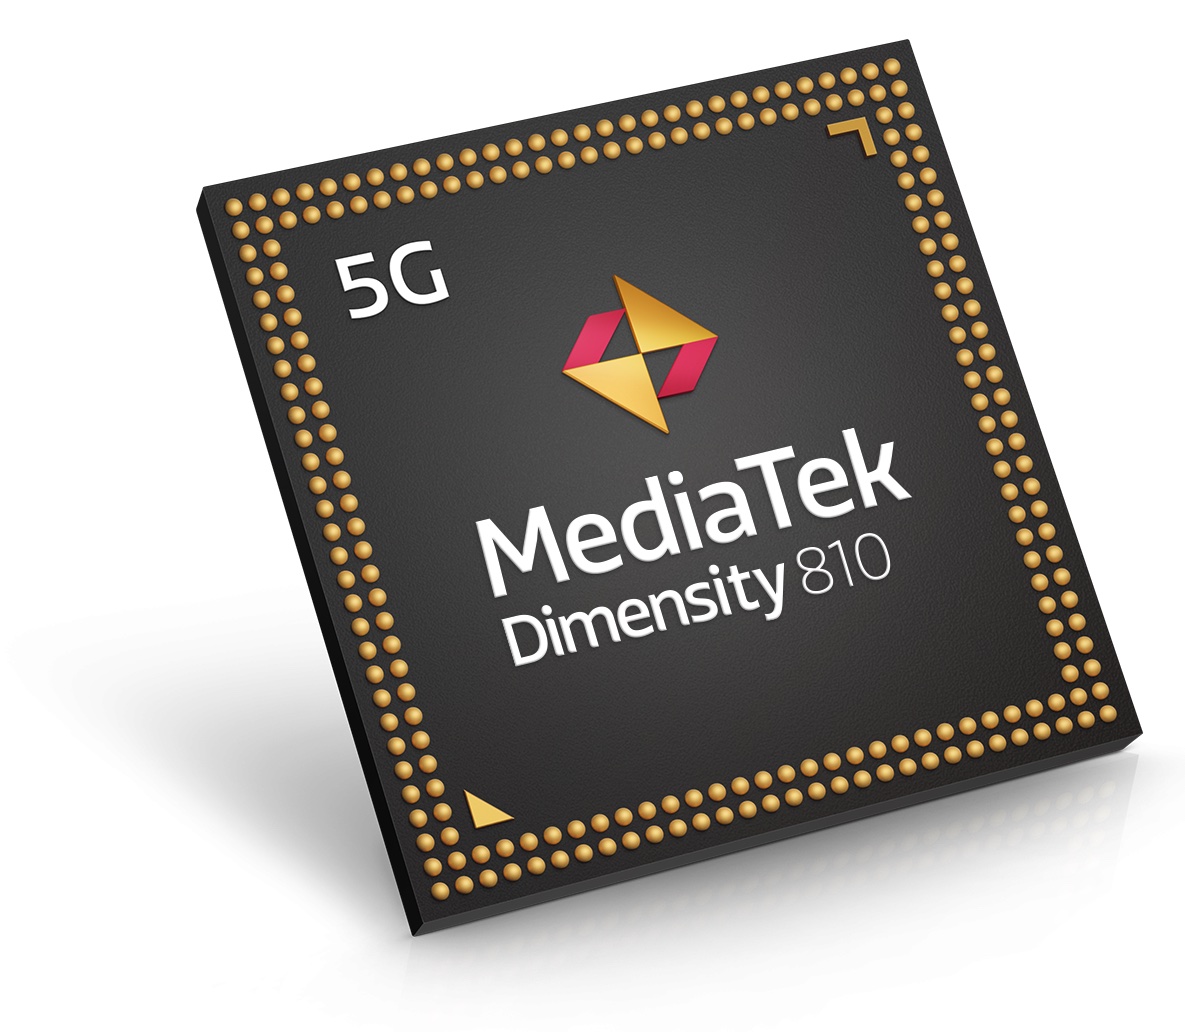 MediaTek Dimensity 810 Processor - Benchmarks and Specs - NotebookCheck.net Tech